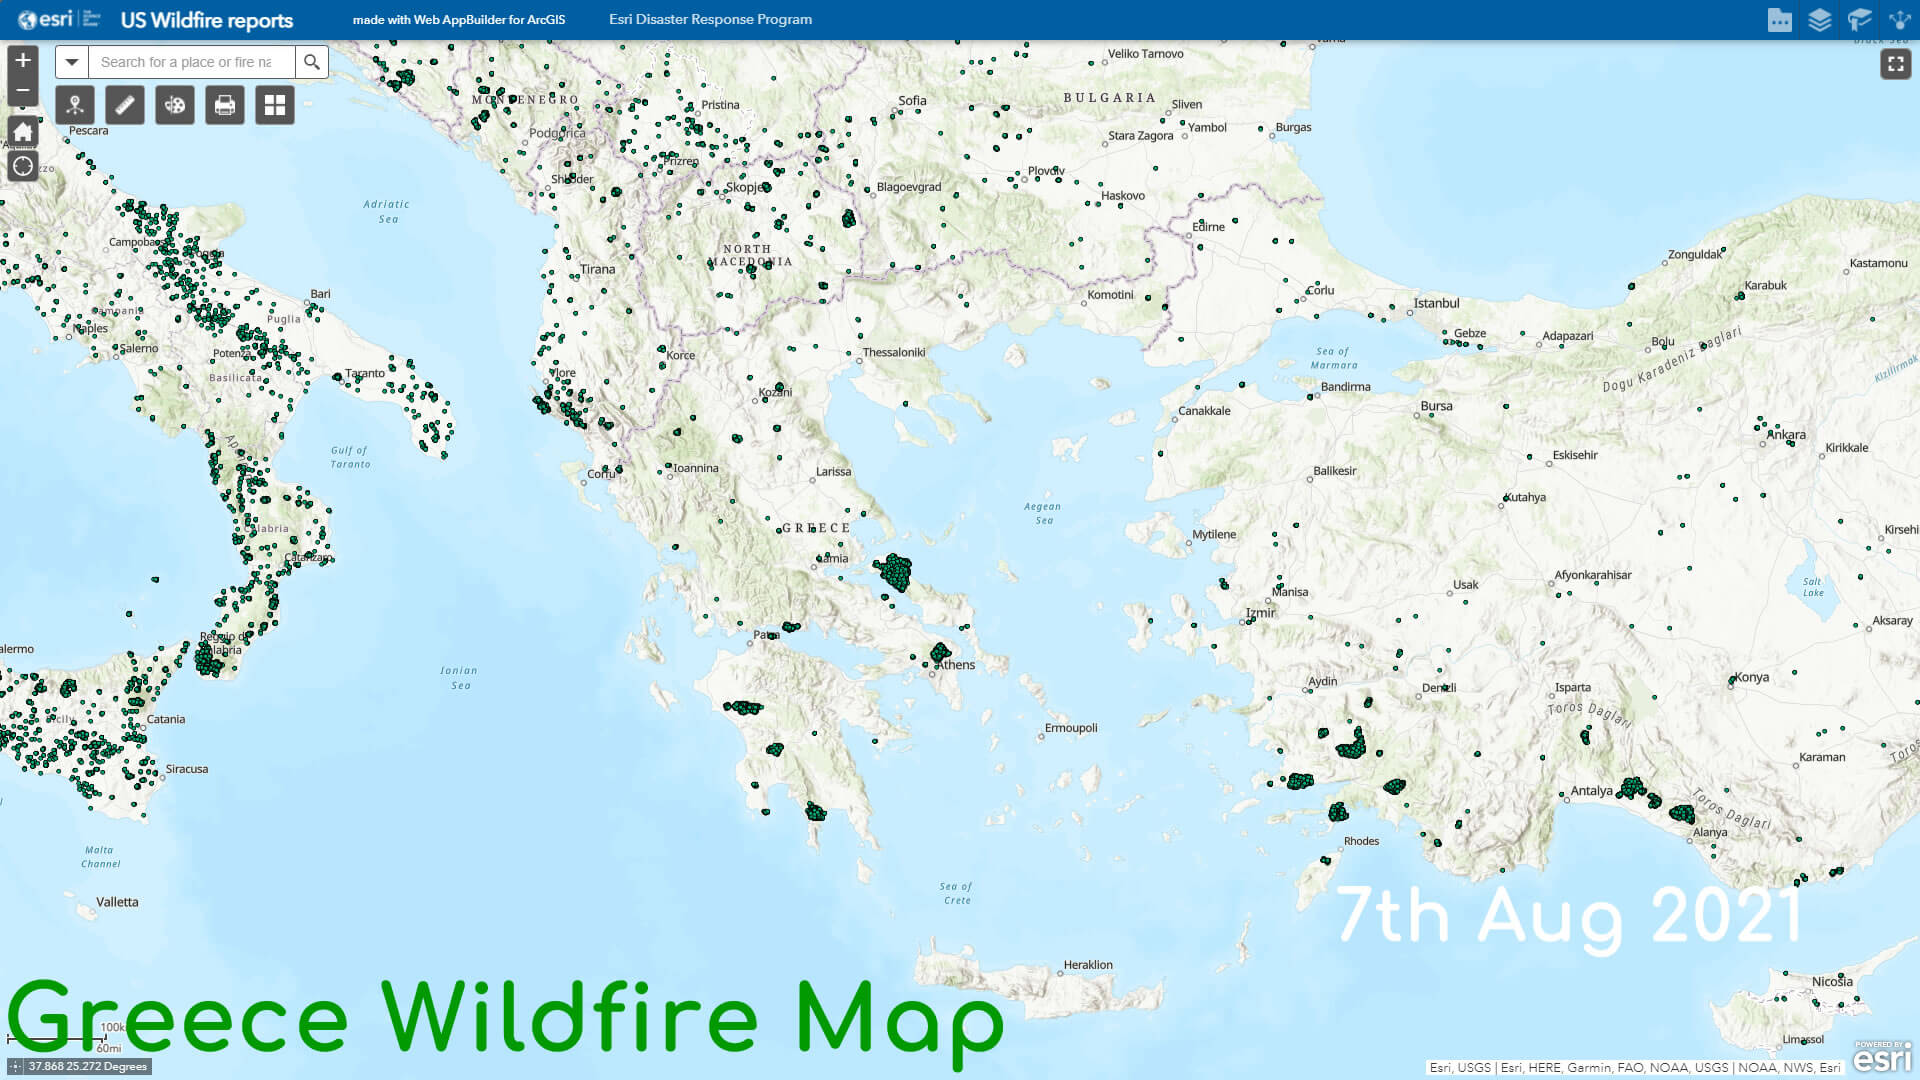 Greece Wildfire Map